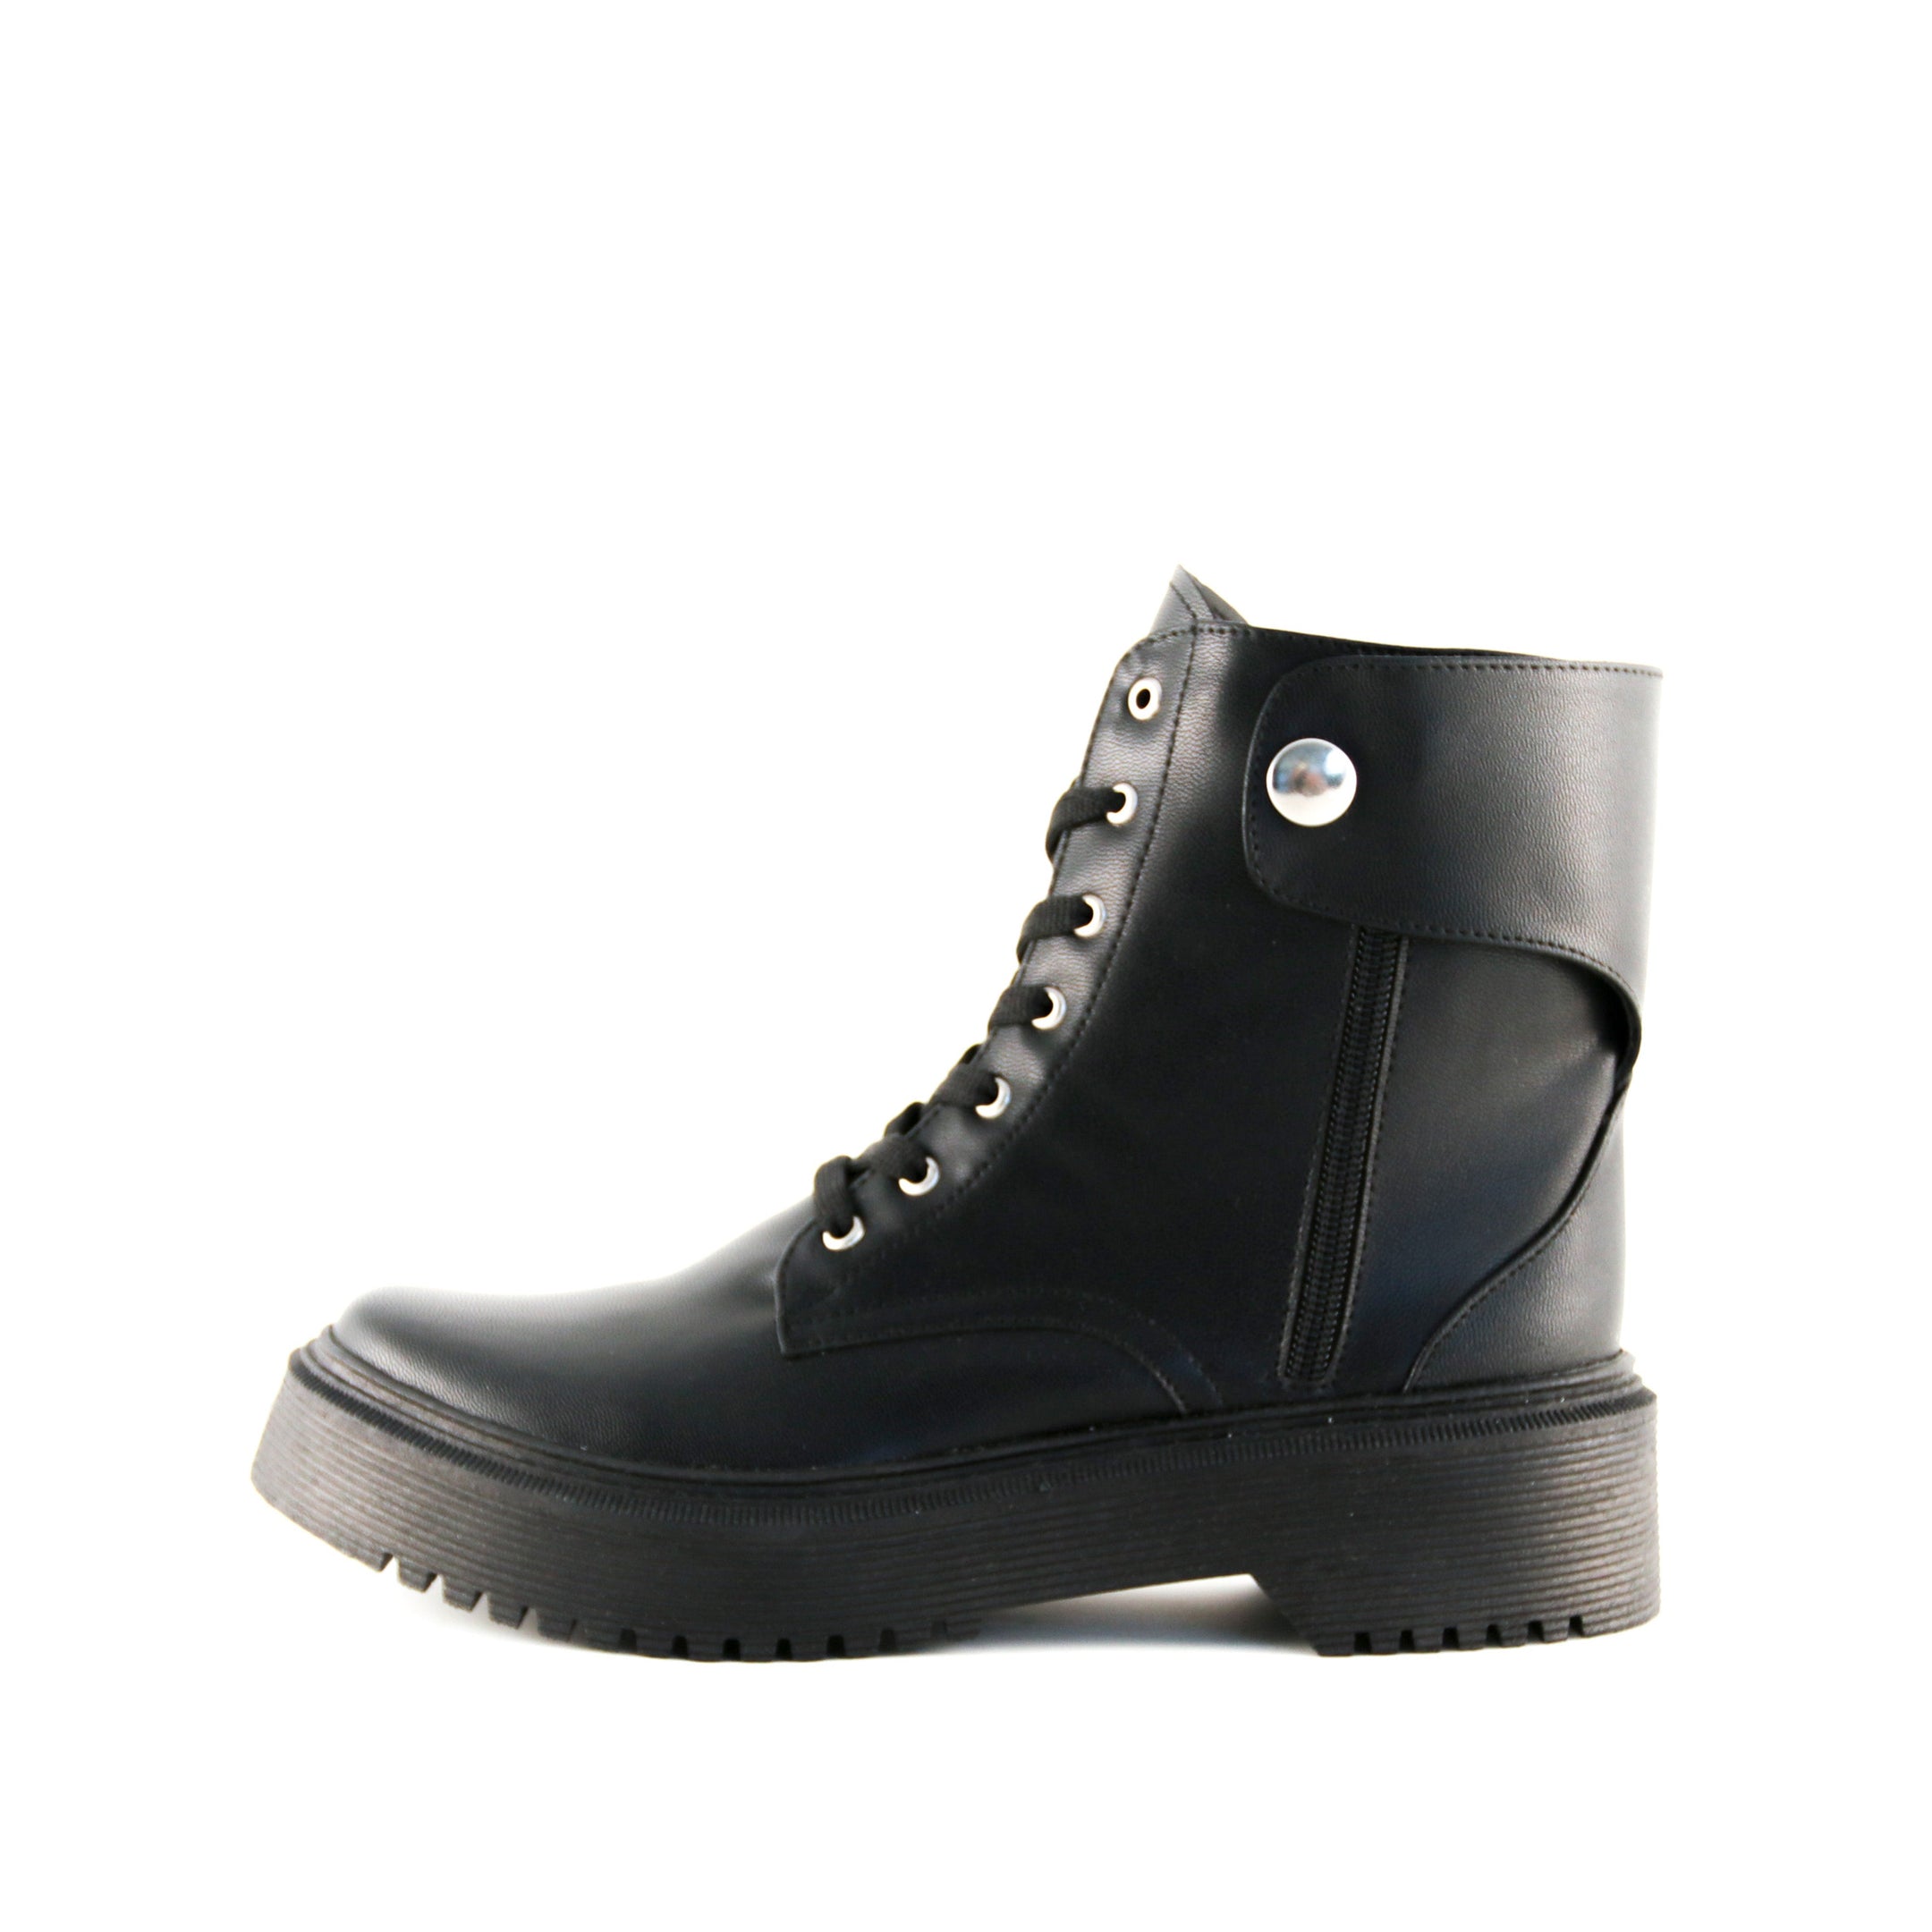 Buy Women's Runaway Combat Boots Black by Nest Shoes